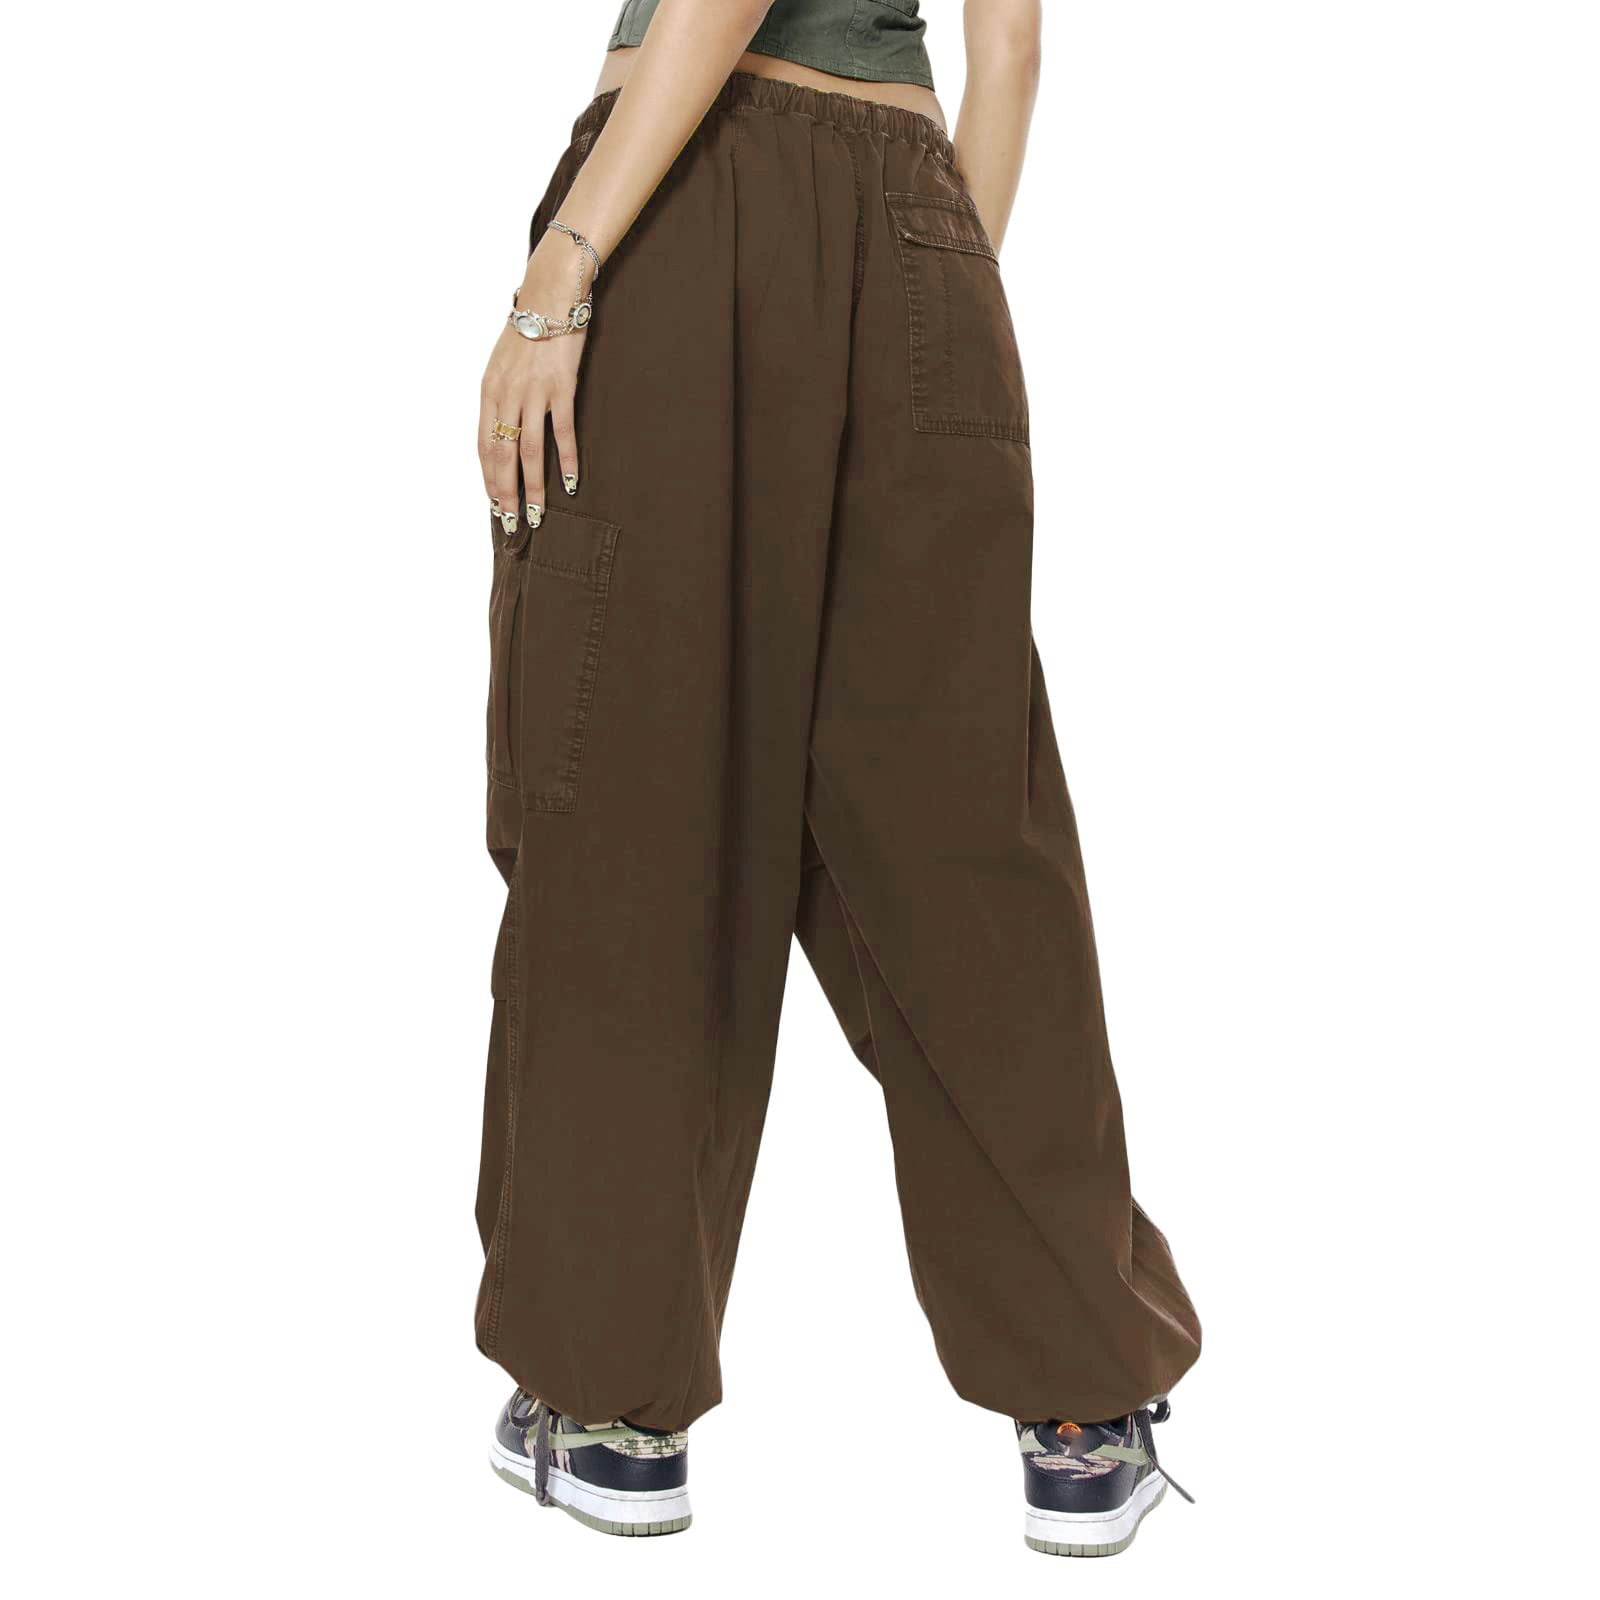 iOPQO crop tops for women Women Low Waist Baggy Cargo Pants Aesthetic  Drawstring Loose Pocket Jogger Trousers Hippie Punk Streetwear Brown S